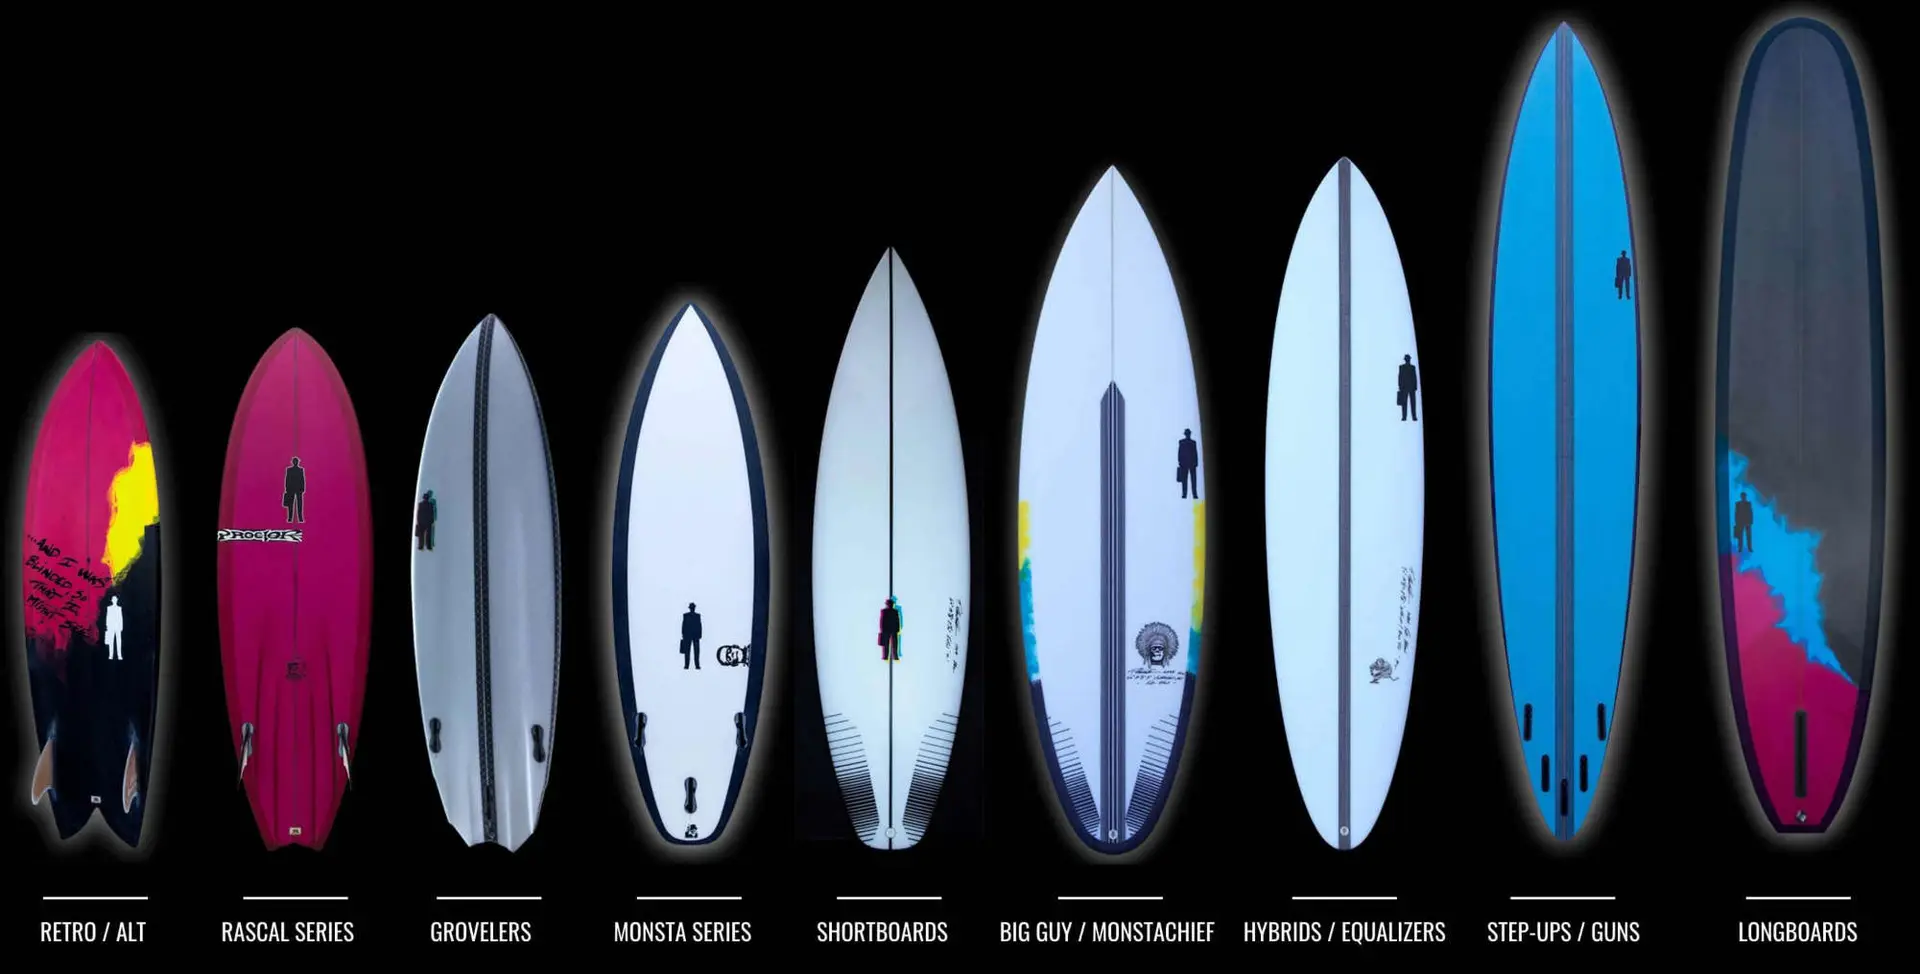 surfboard models categories by proctor surfboards including fish, grovelers, shortboards, guns, midlength, longboards, big guy shortboards, monstachief